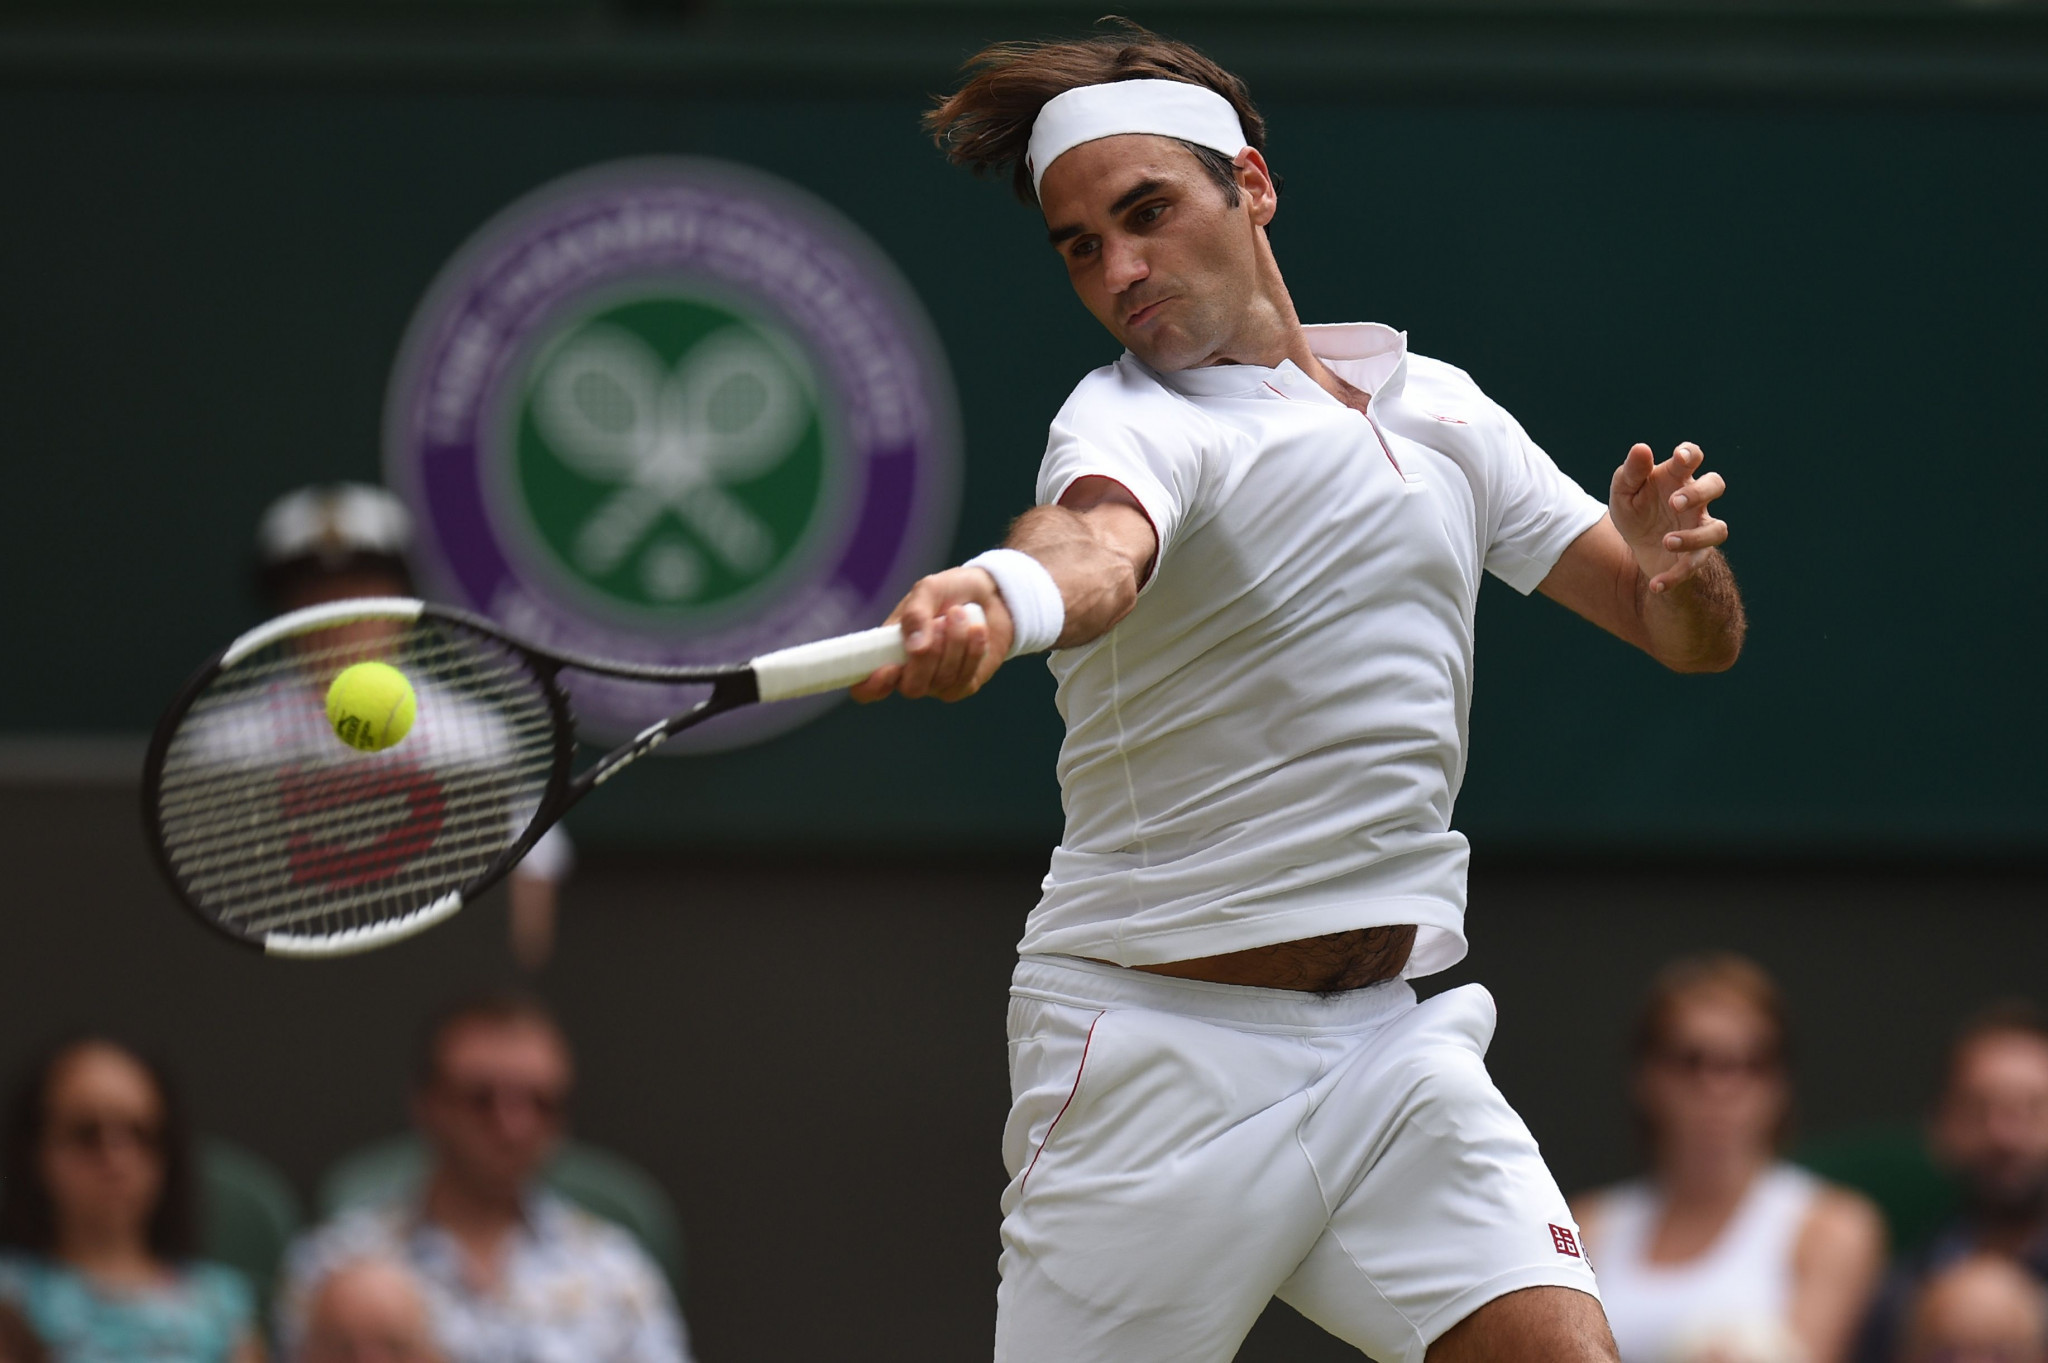 Federer breezes through on manic day at Wimbledon